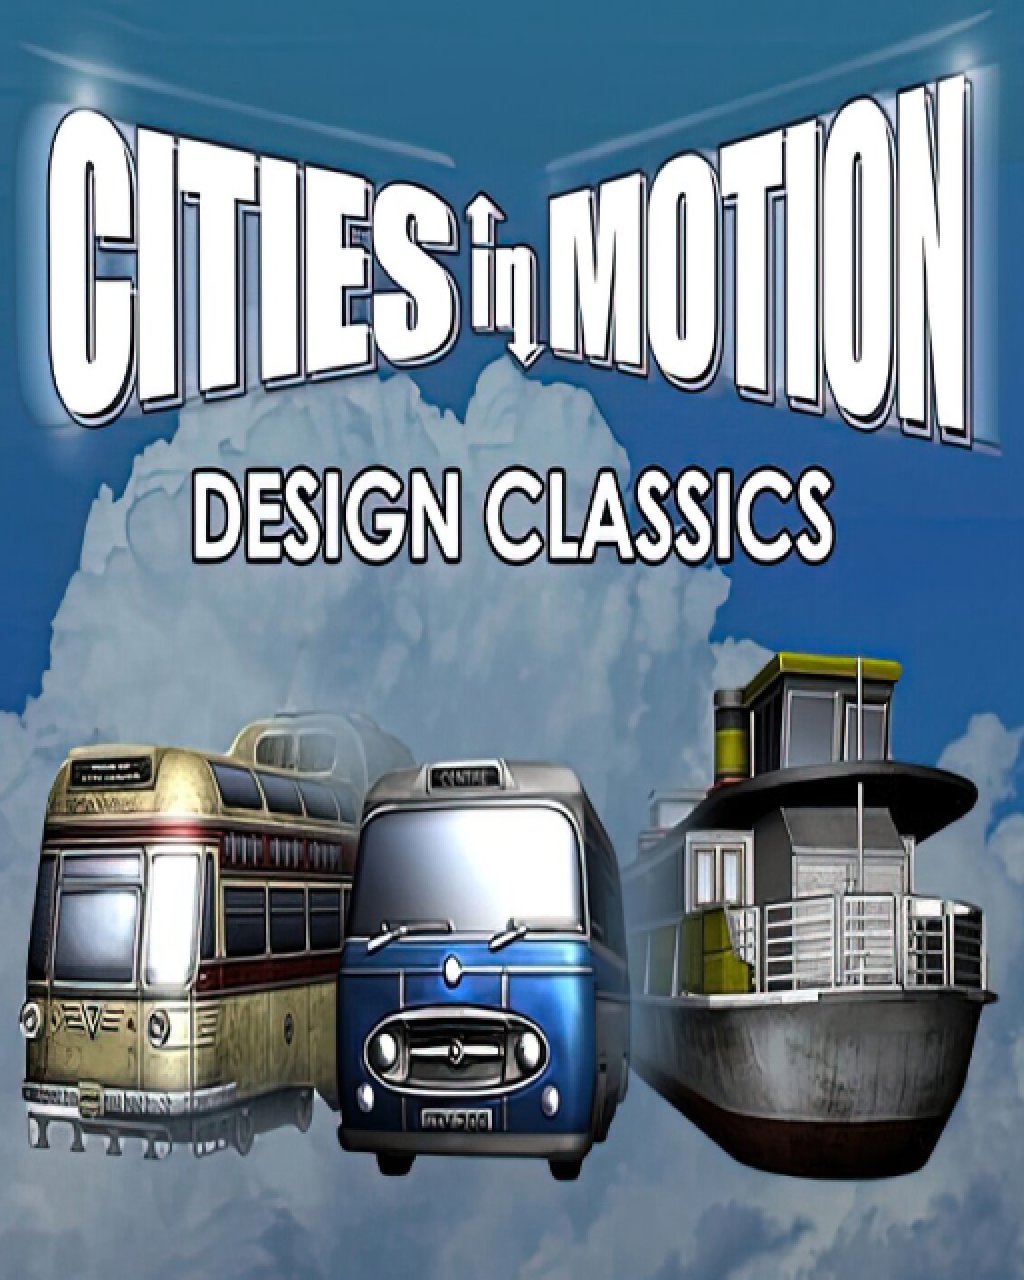 ESD Cities in Motion Design Classics